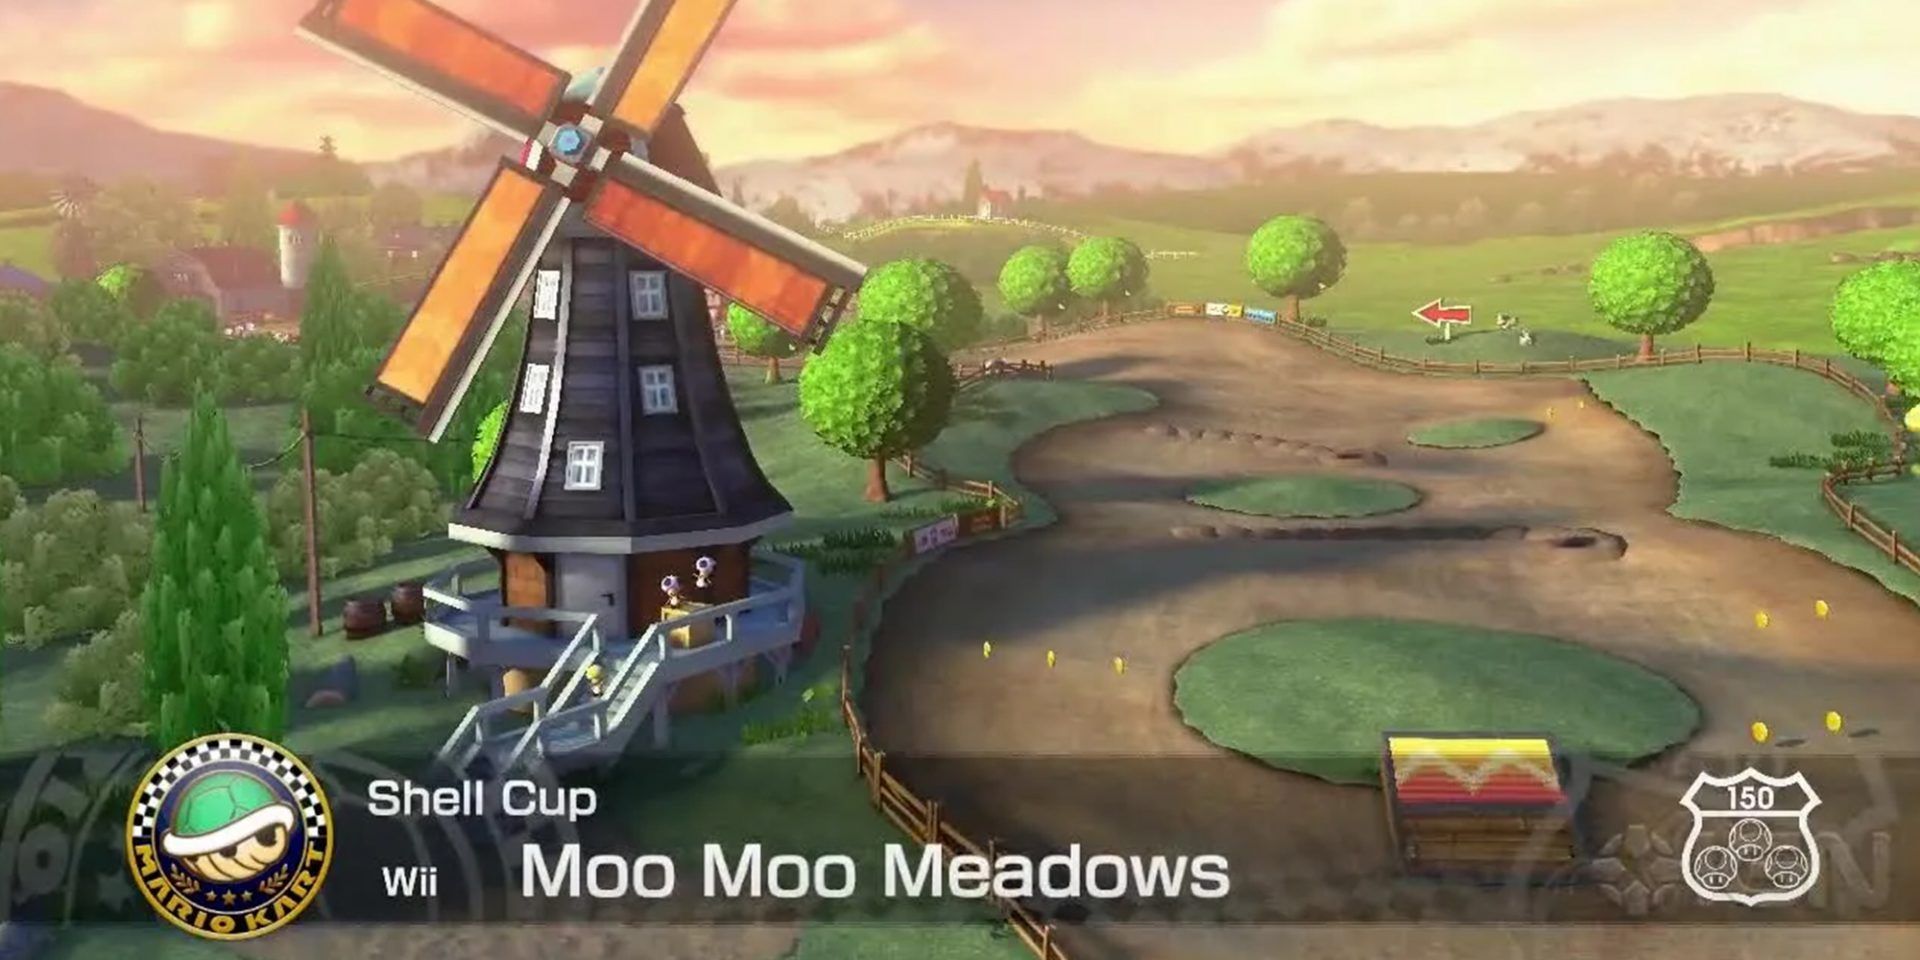 Moo Moo Meadows In Mario Kart 8